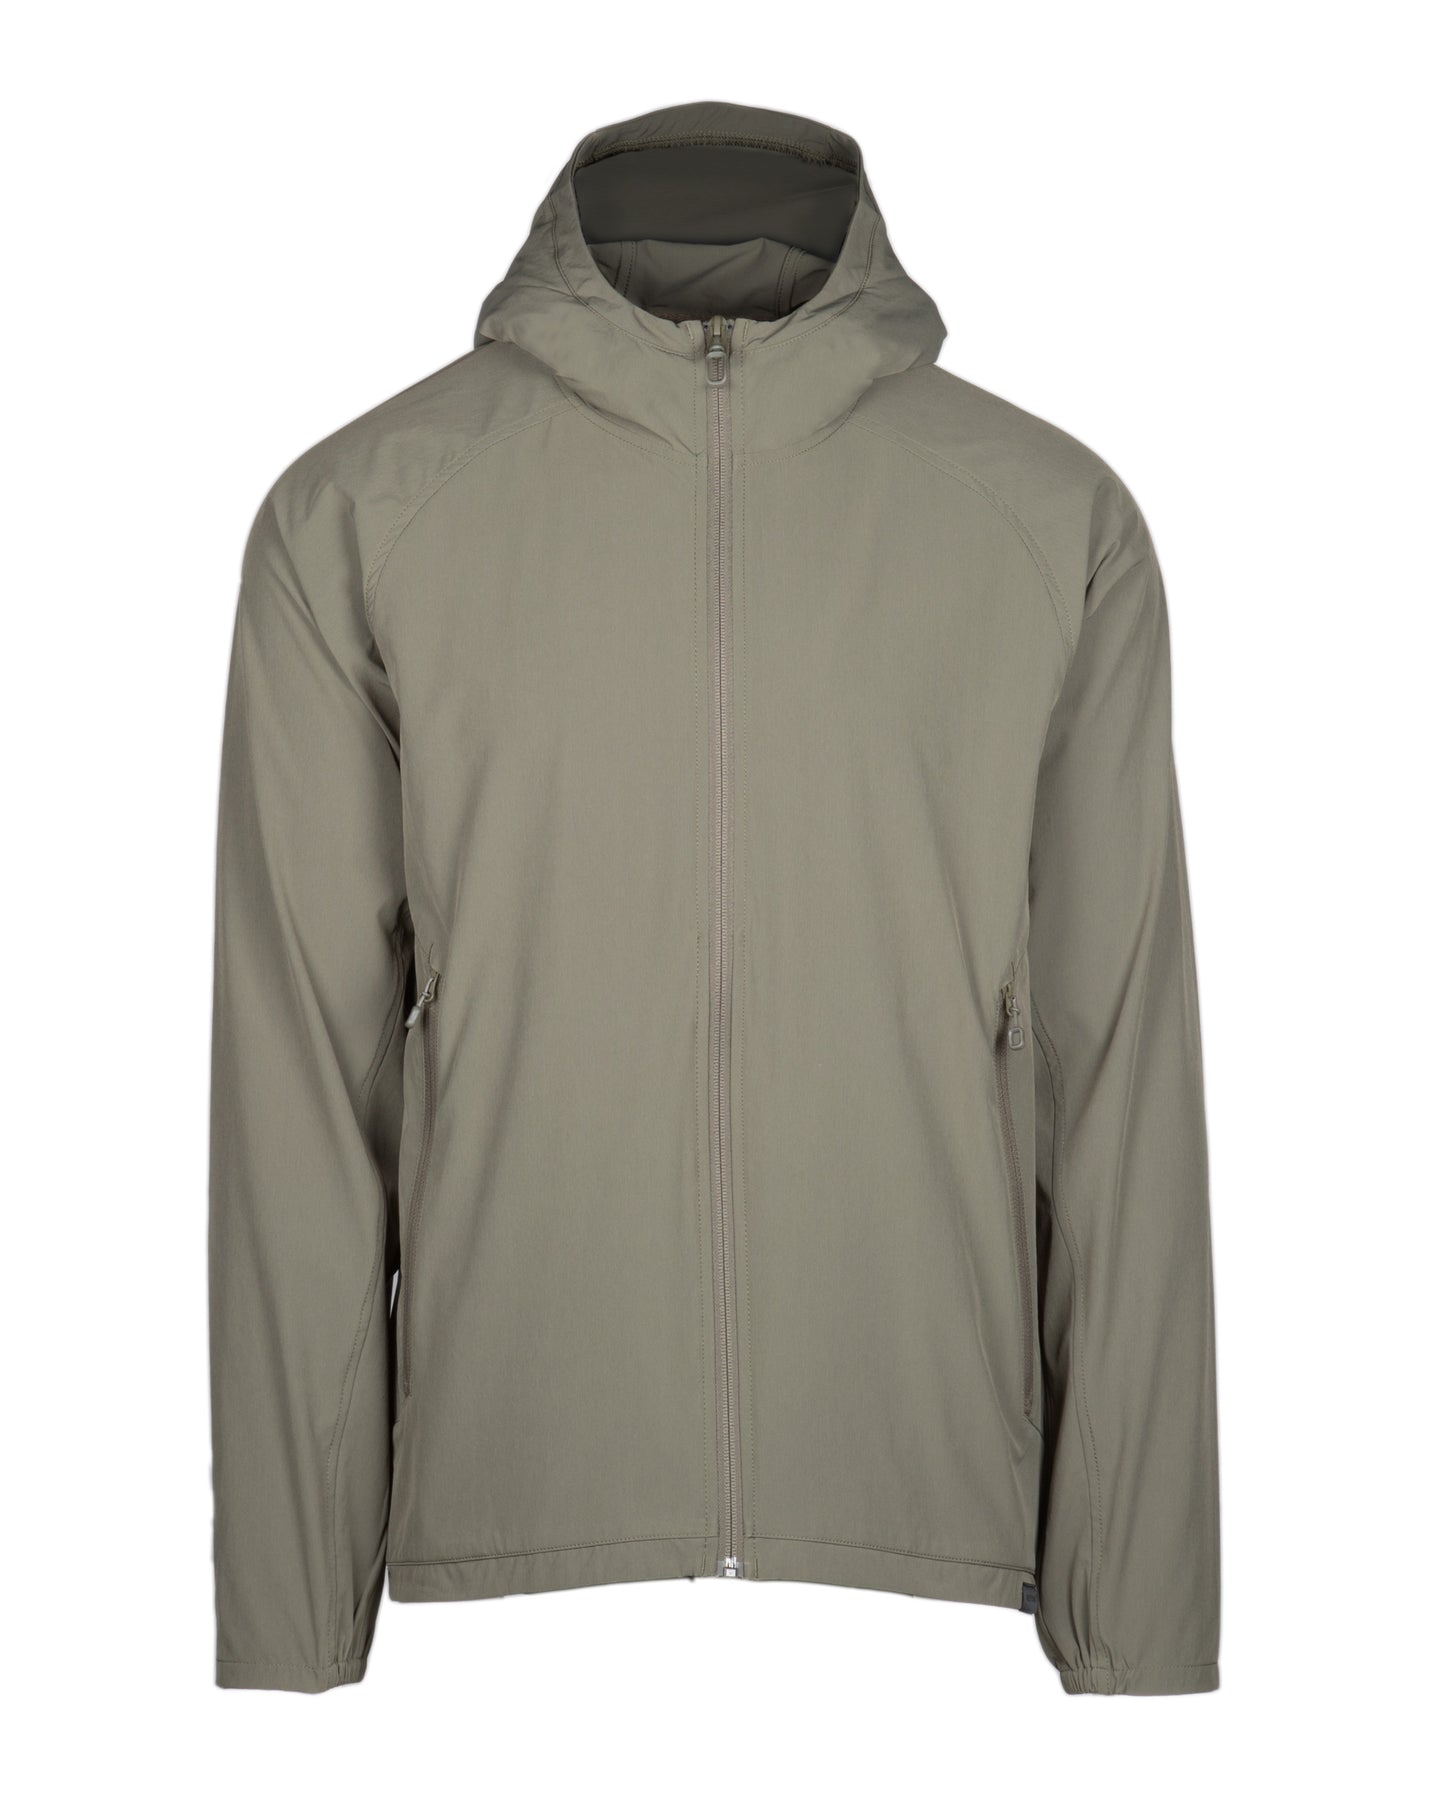 Full Sleeve Unisex Travel Hoodie Jackets 5XL / Grey